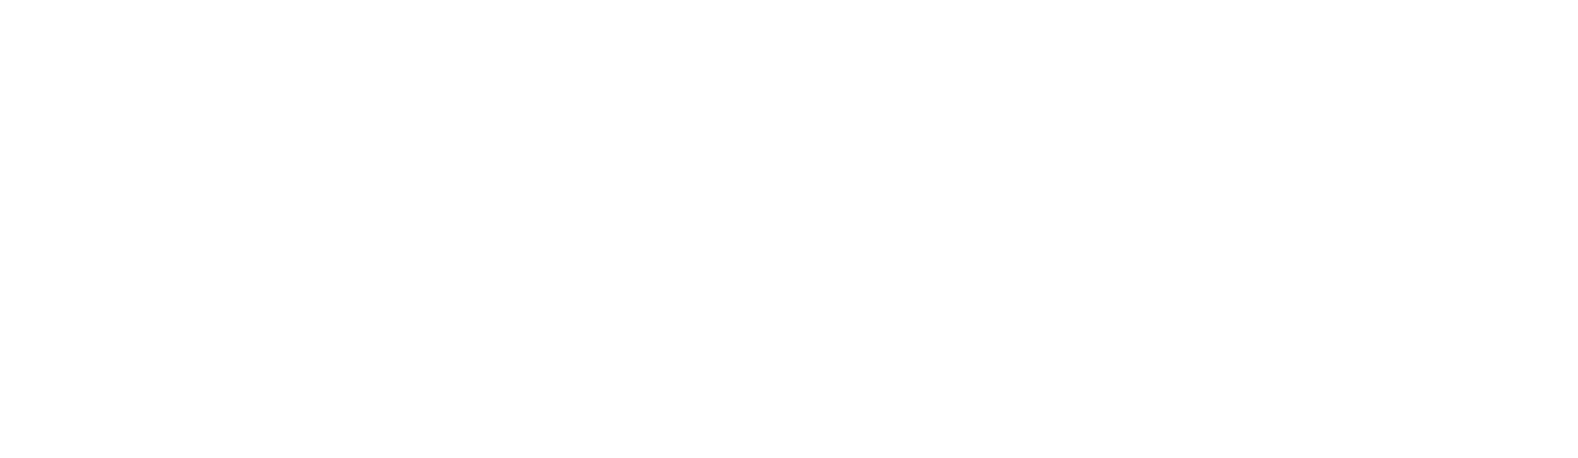 Sweco logo large for dark backgrounds (transparent PNG)